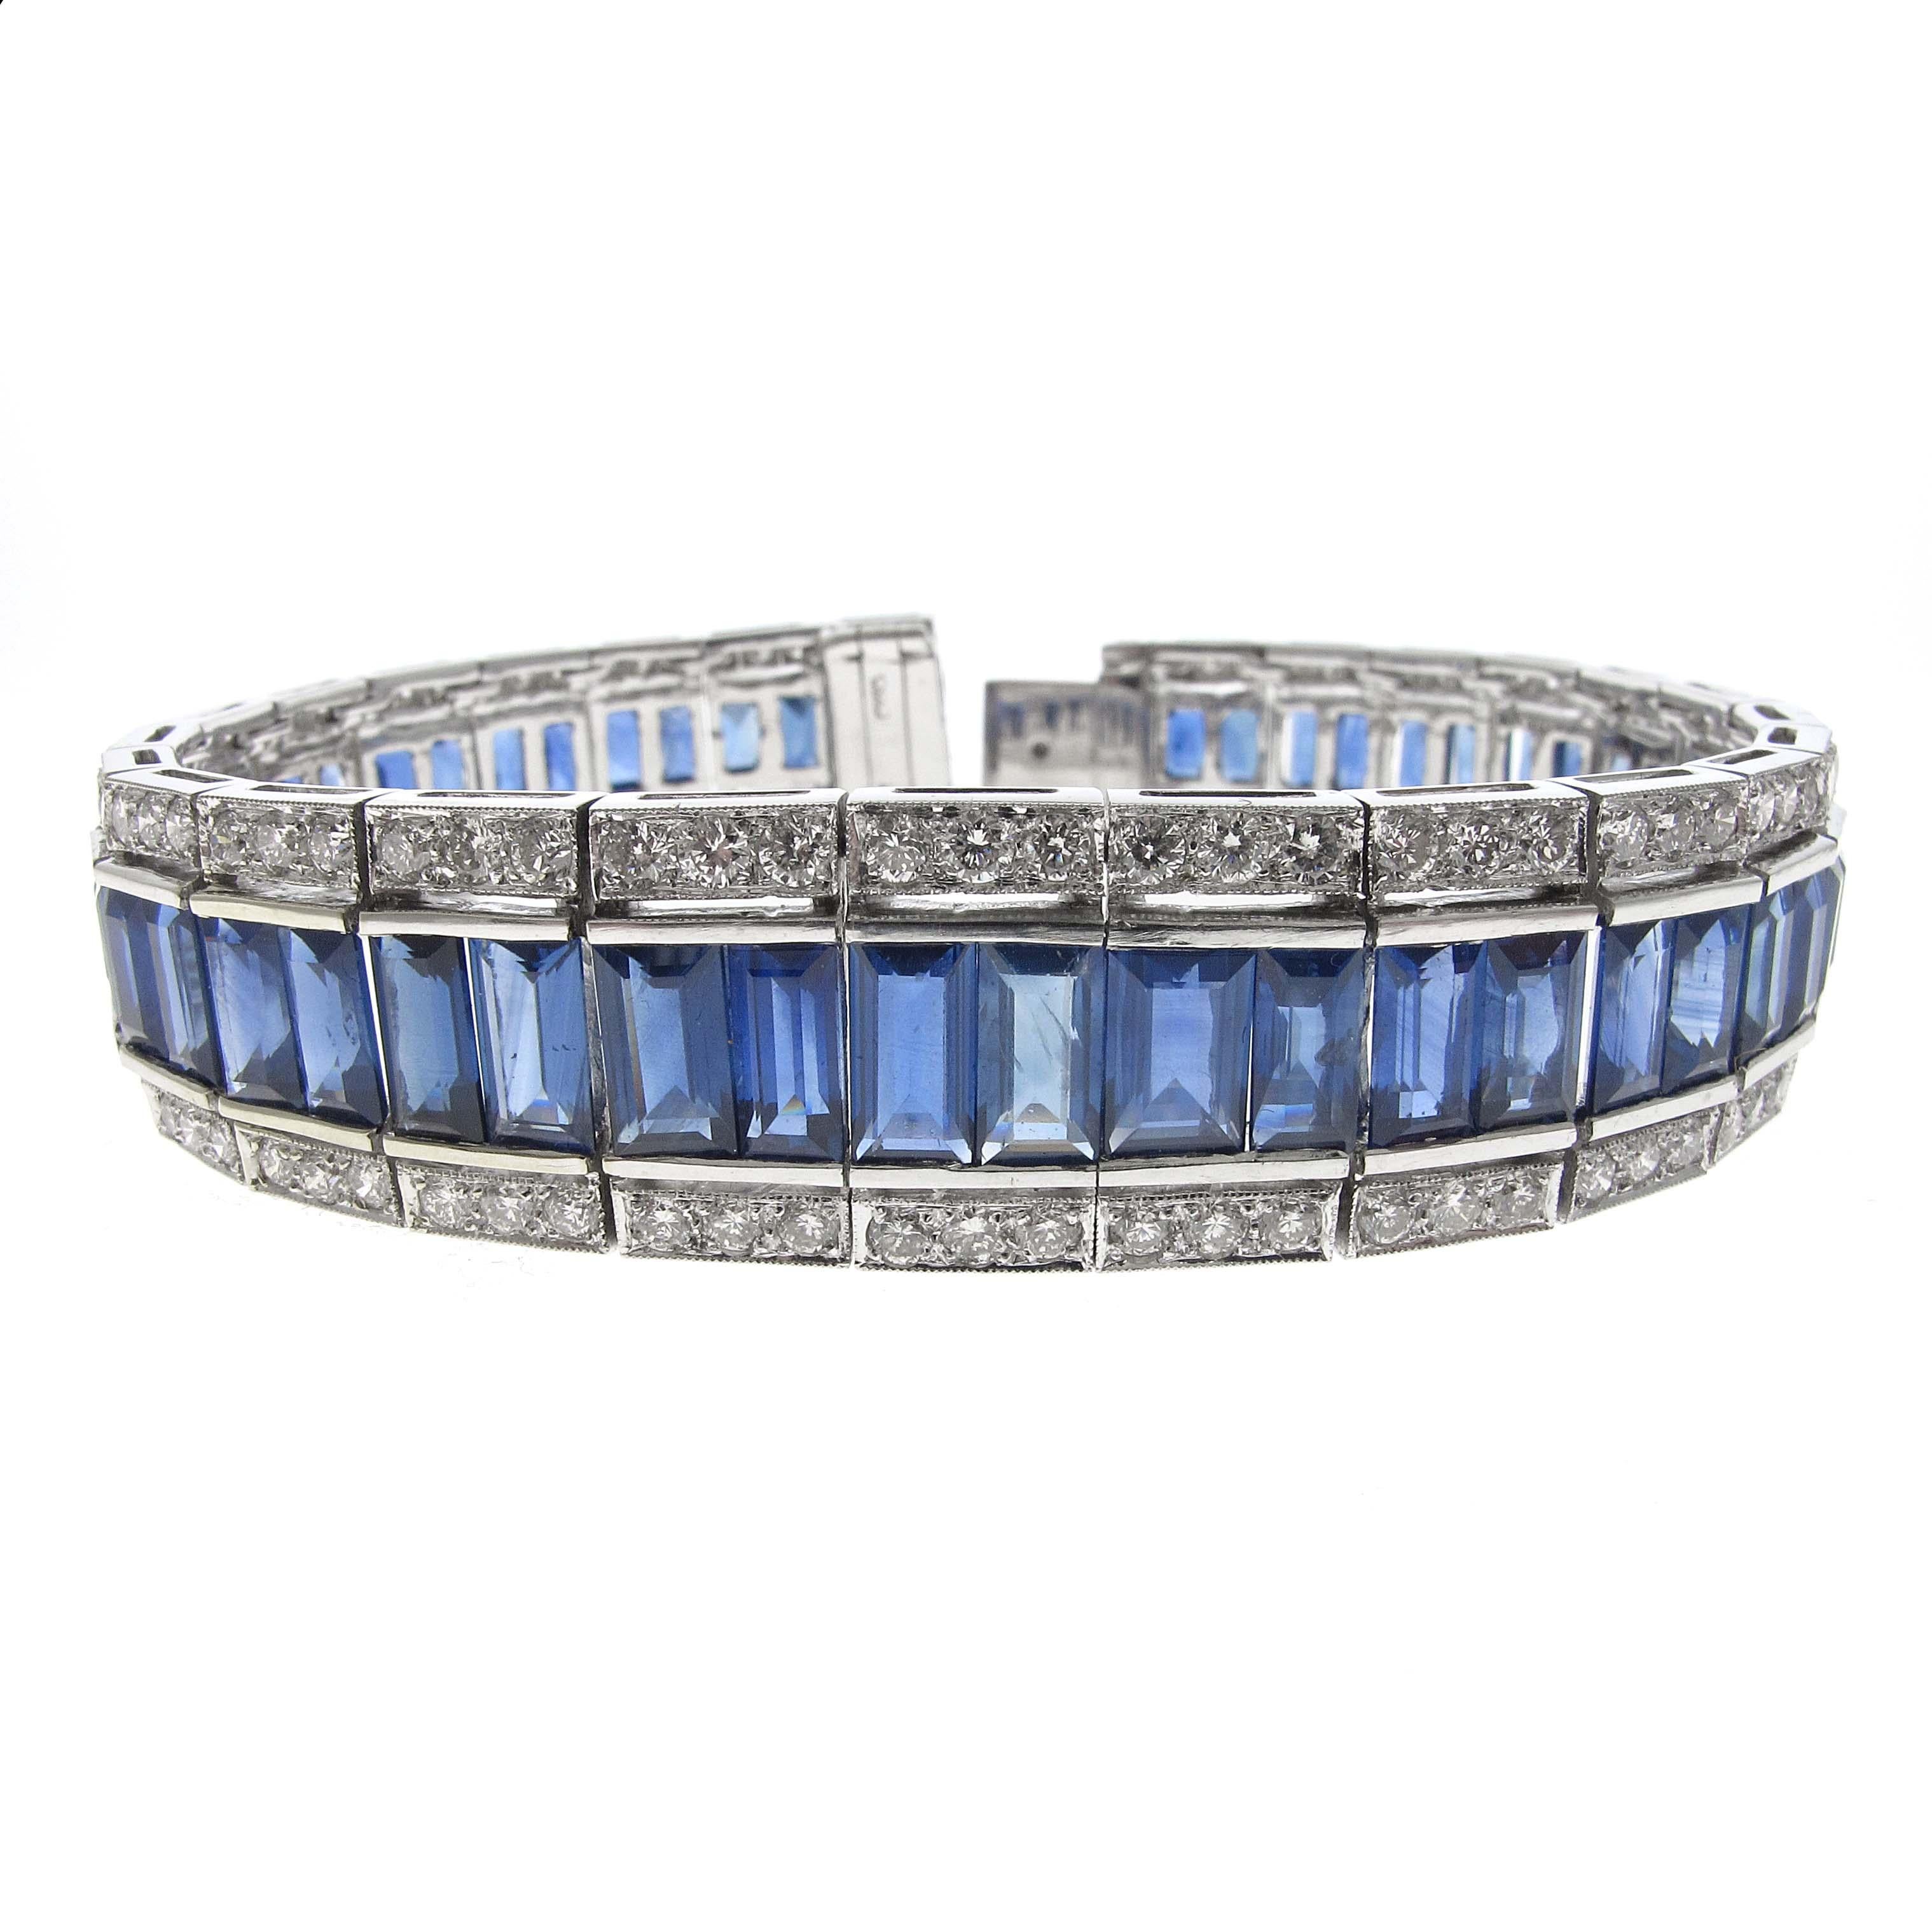 Retro 30 Carat of Blue Sapphires with 4 Carat of Diamonds Bracelet Set in 18 Karat WG